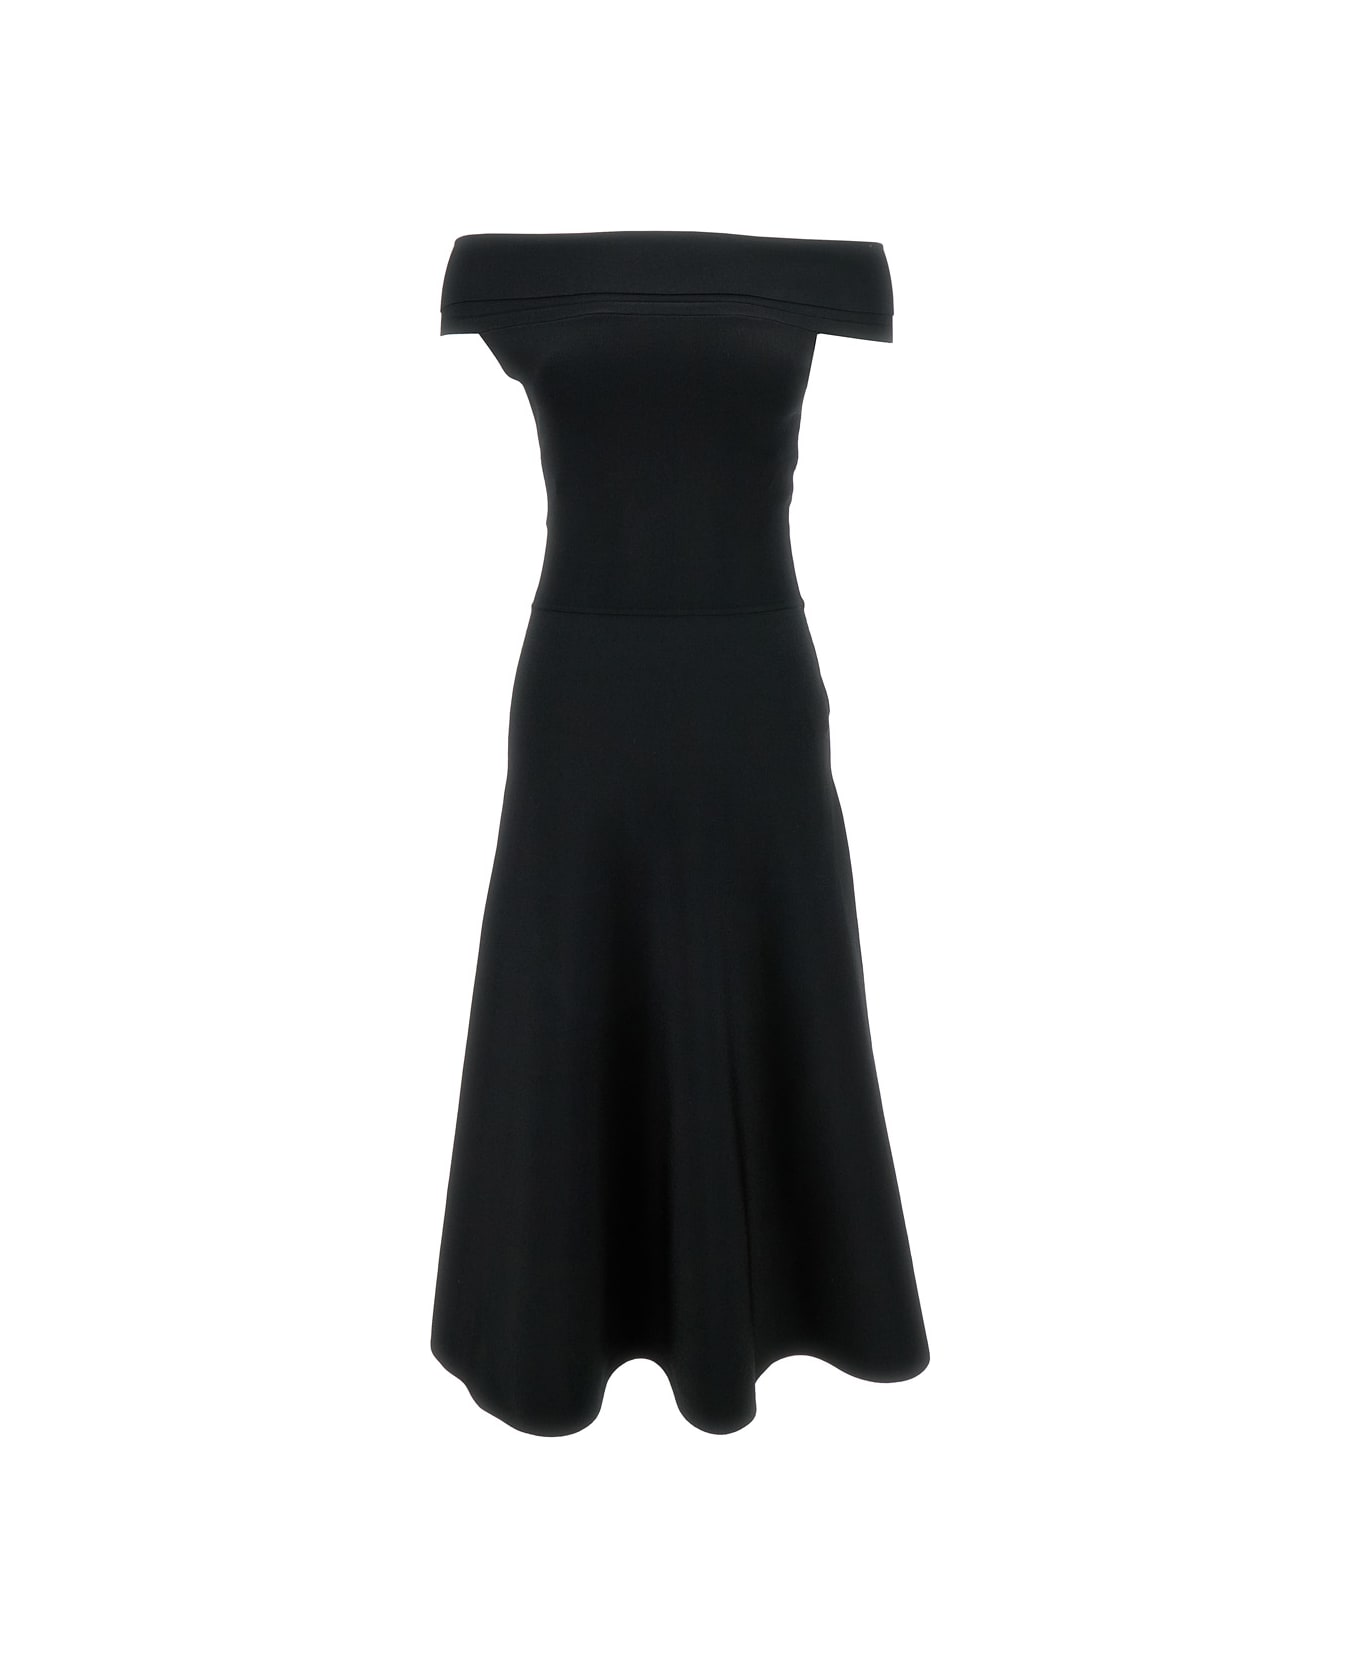 Fabiana Filippi Maxi Black Dress With Flared Skirt In Viscose Blend Woman - Black